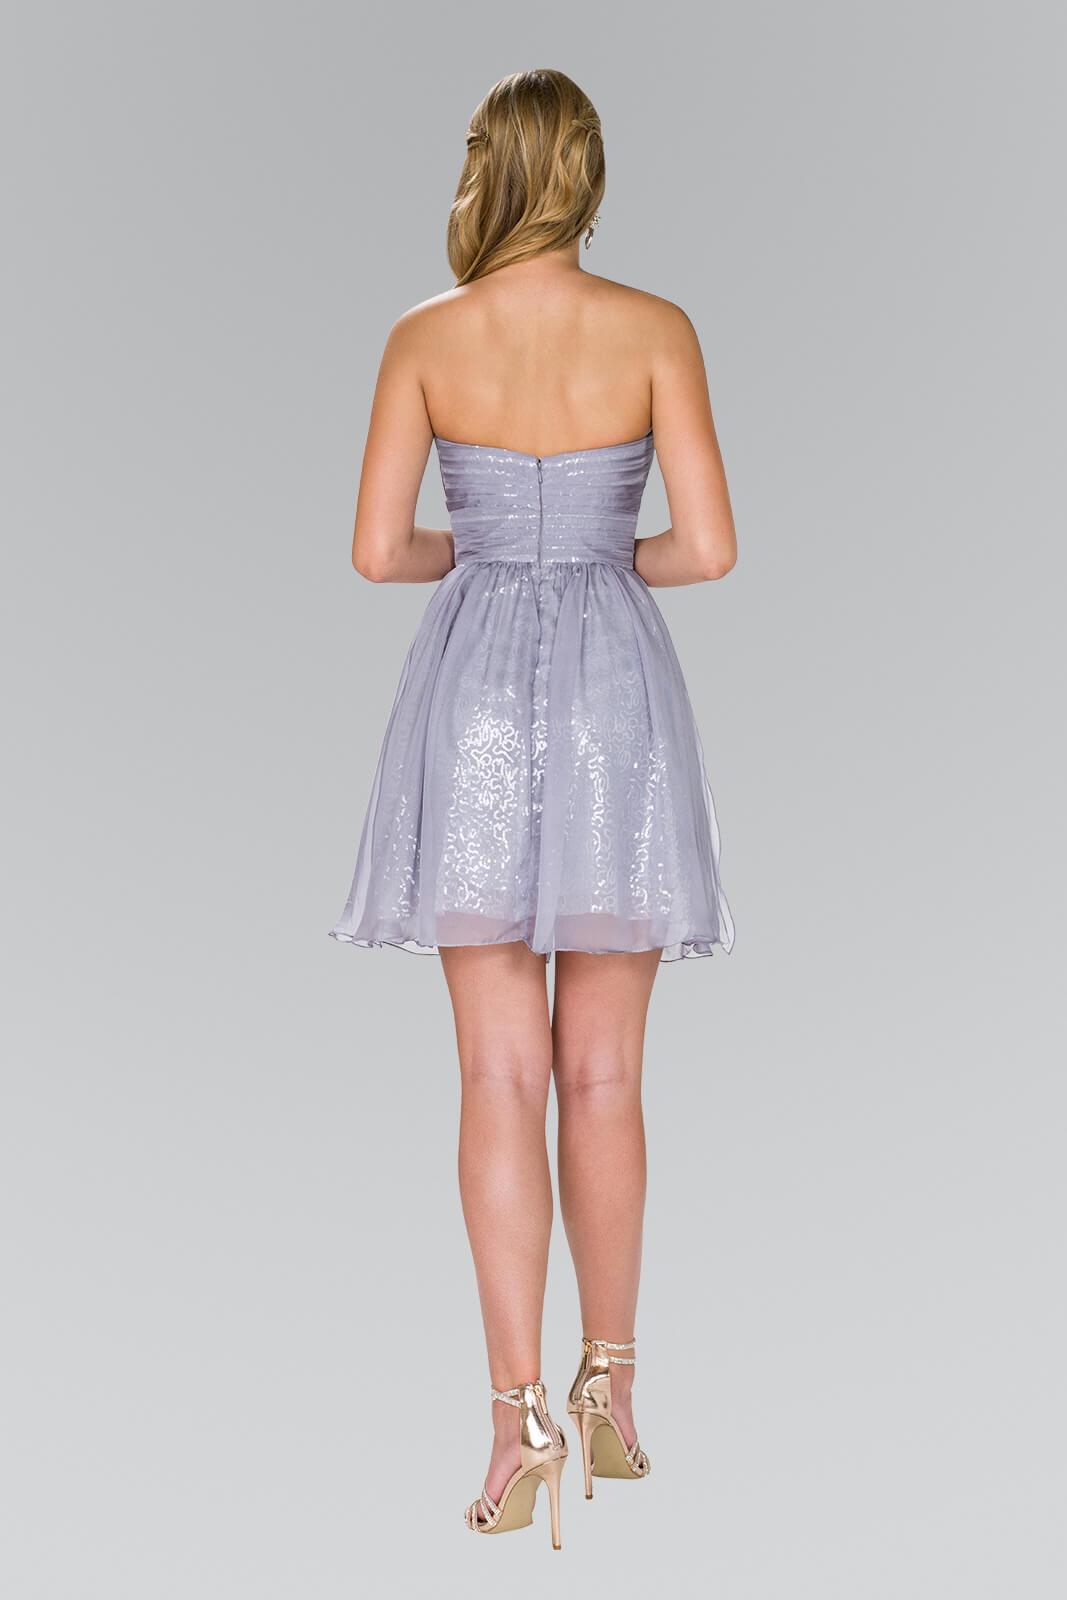 Short Strapless Sweetheart Prom Dress - The Dress Outlet Elizabeth K